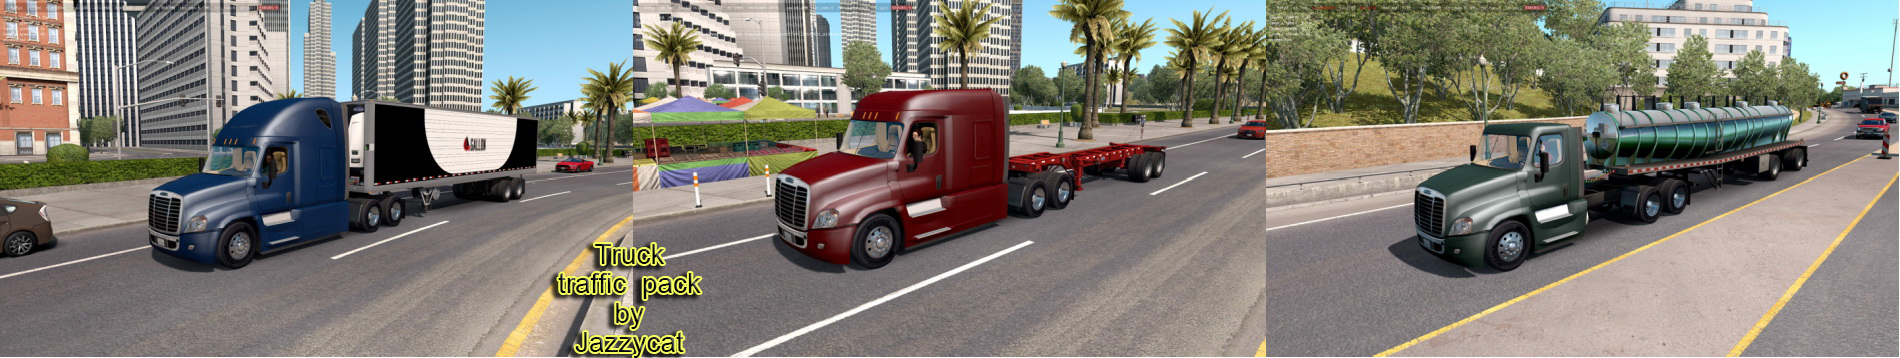 truck24 new